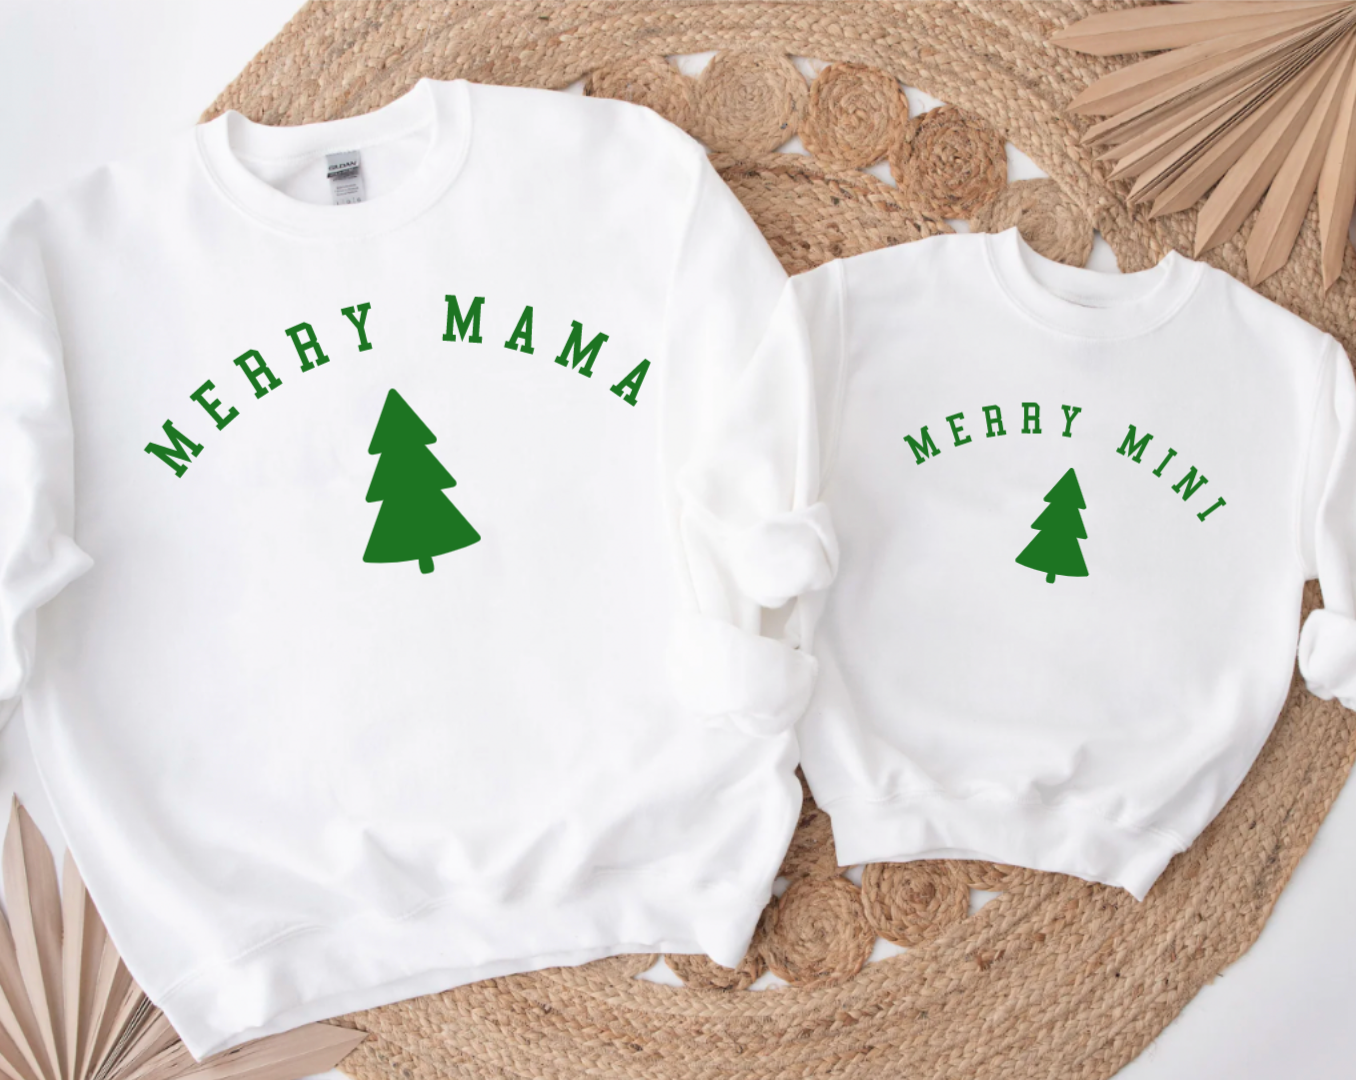 Merry Mama and Merry Mini Matching White Long Sleeve Tees